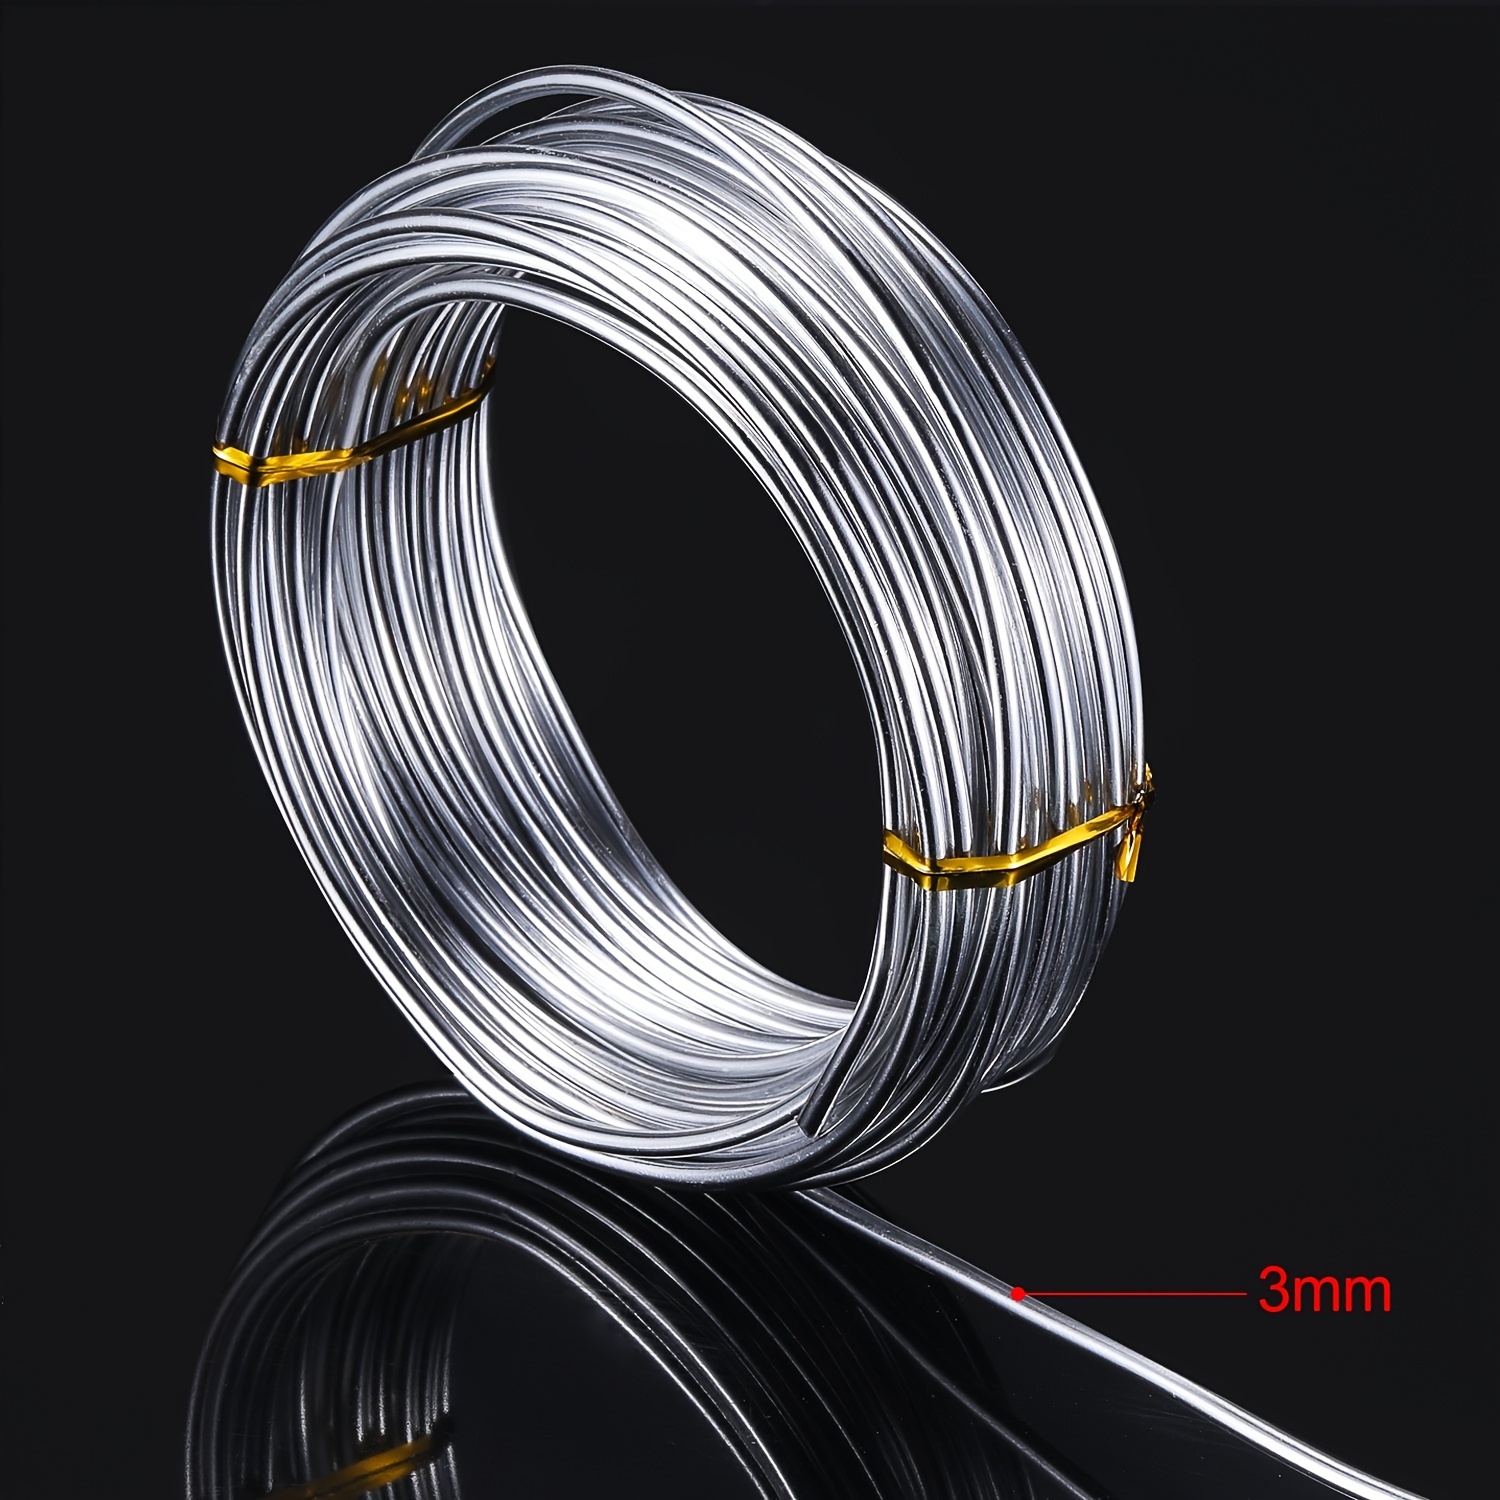 Alambre de aluminio negro de 16.4 pies de grosor de 0.118 in de grosor,  alambre de metal flexible para manualidades